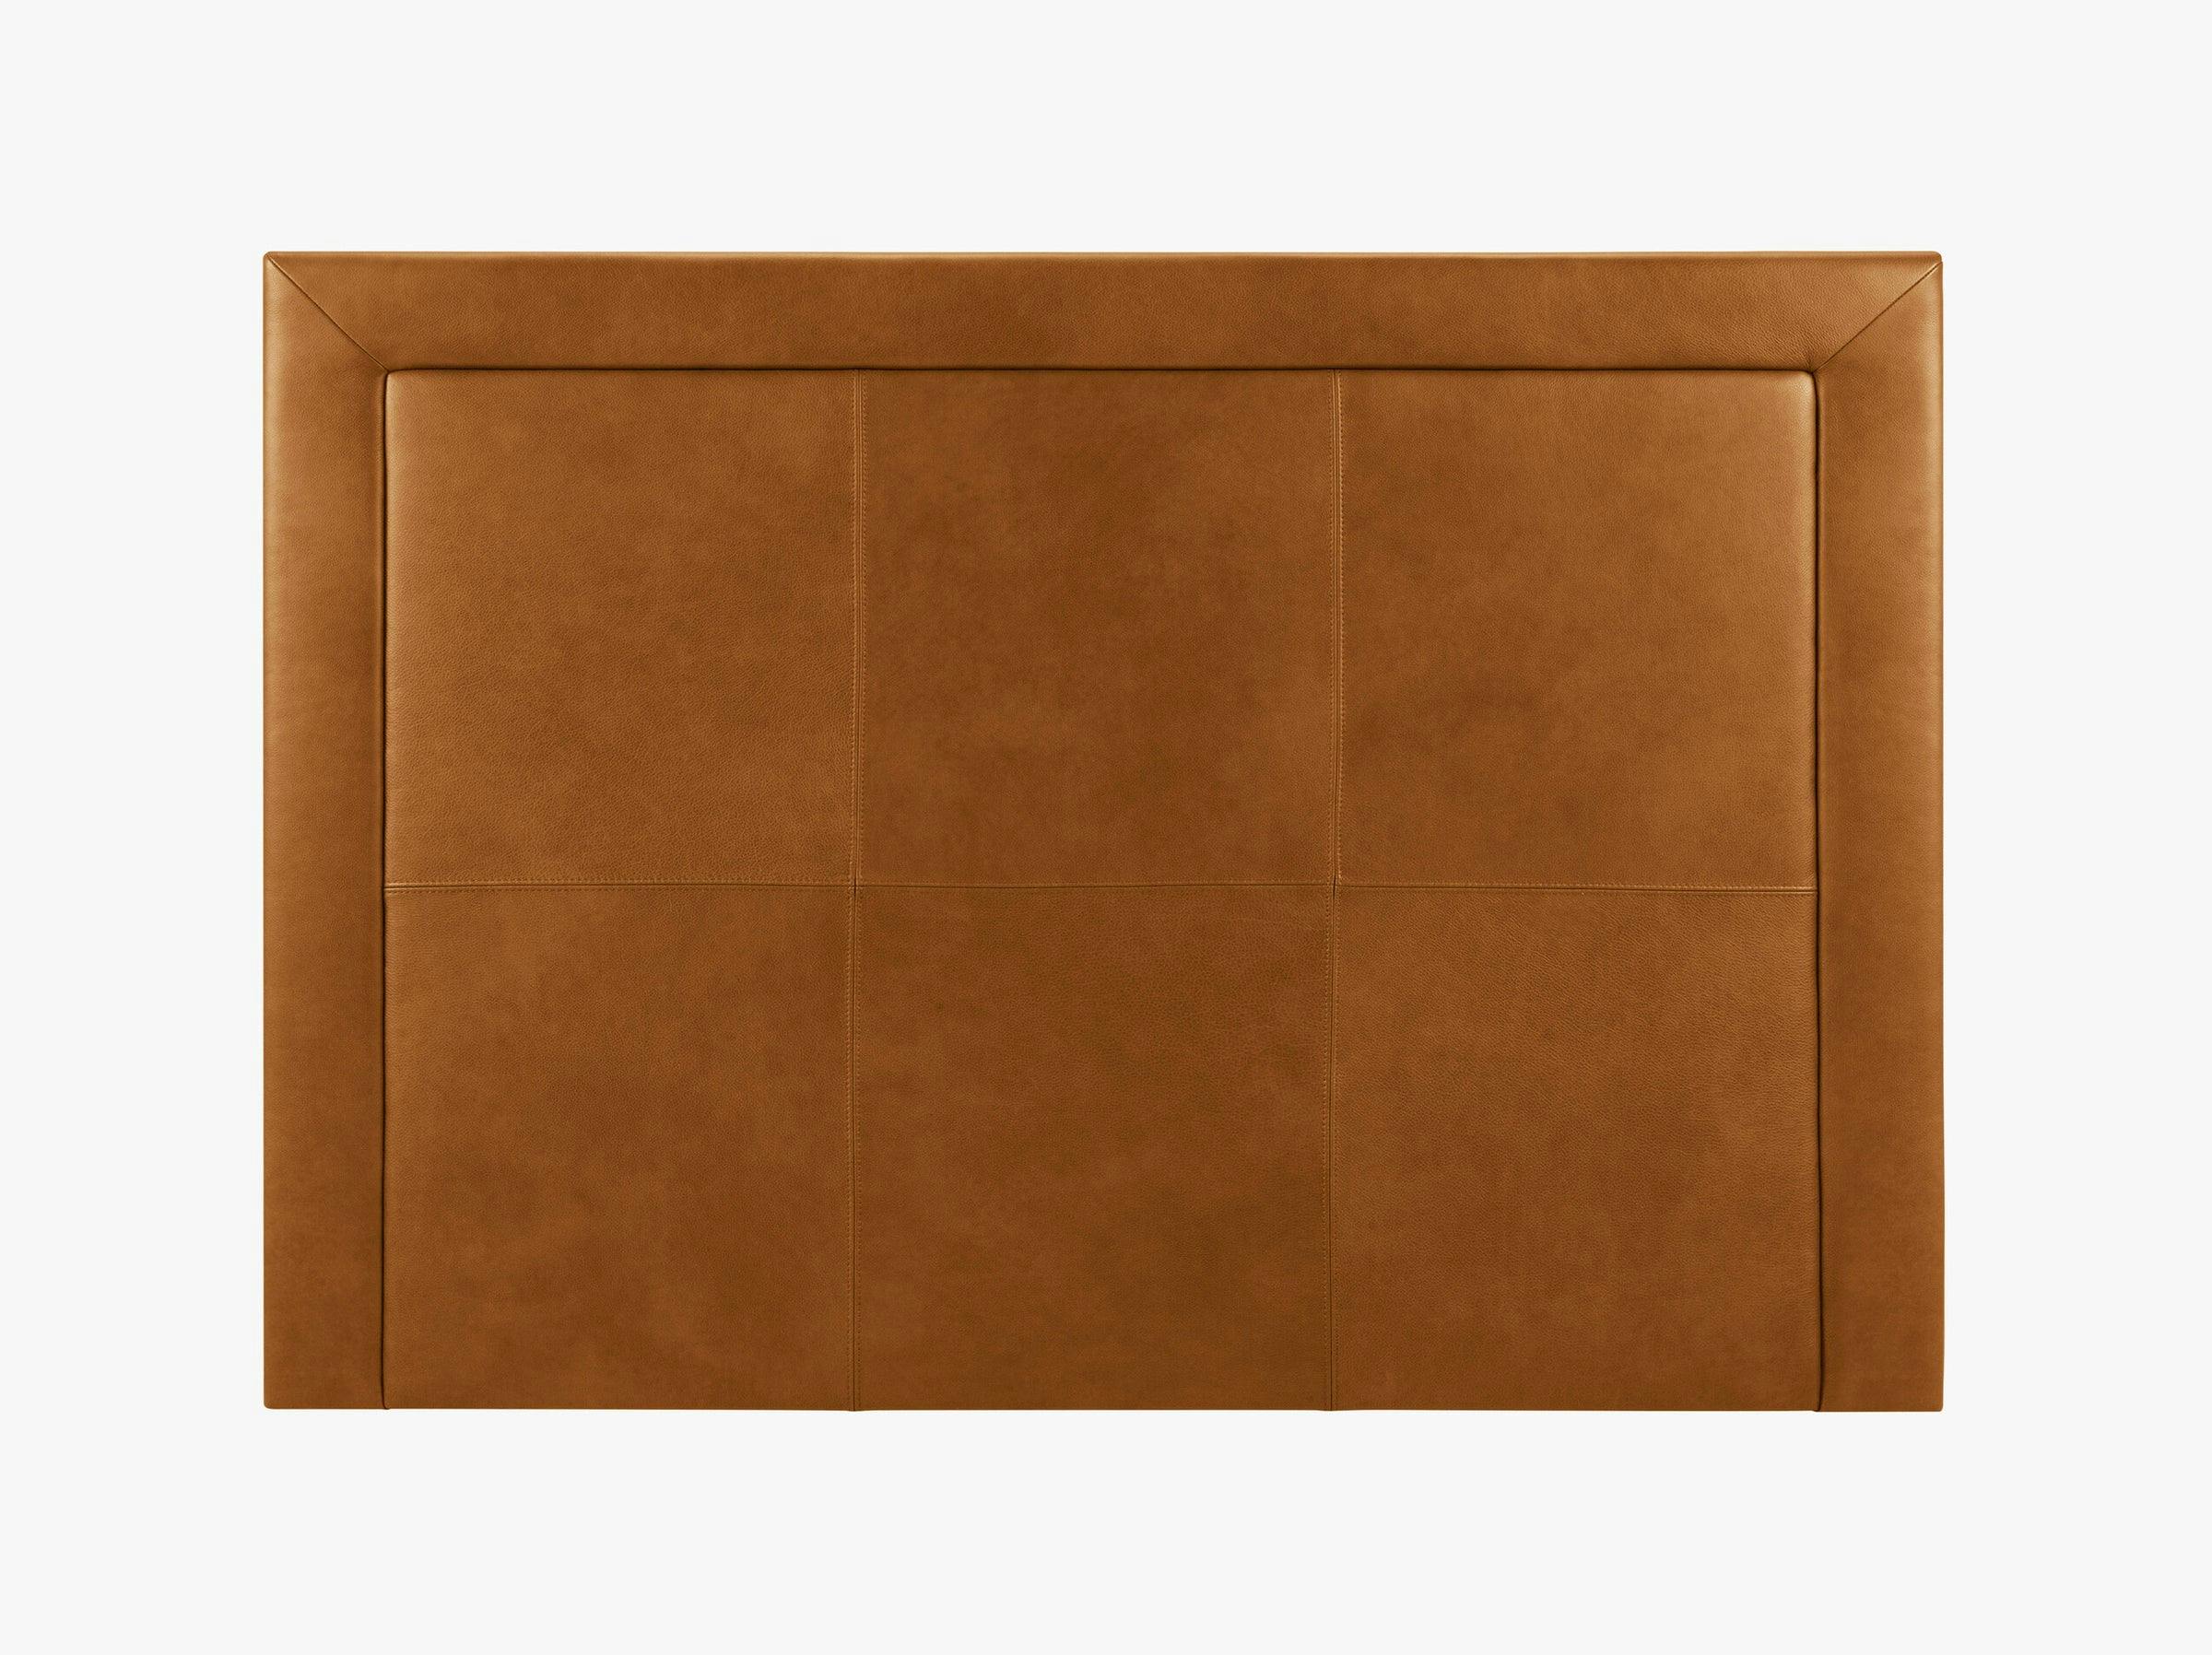 Philippe Genuine leather (Grasah) / Light brown 0